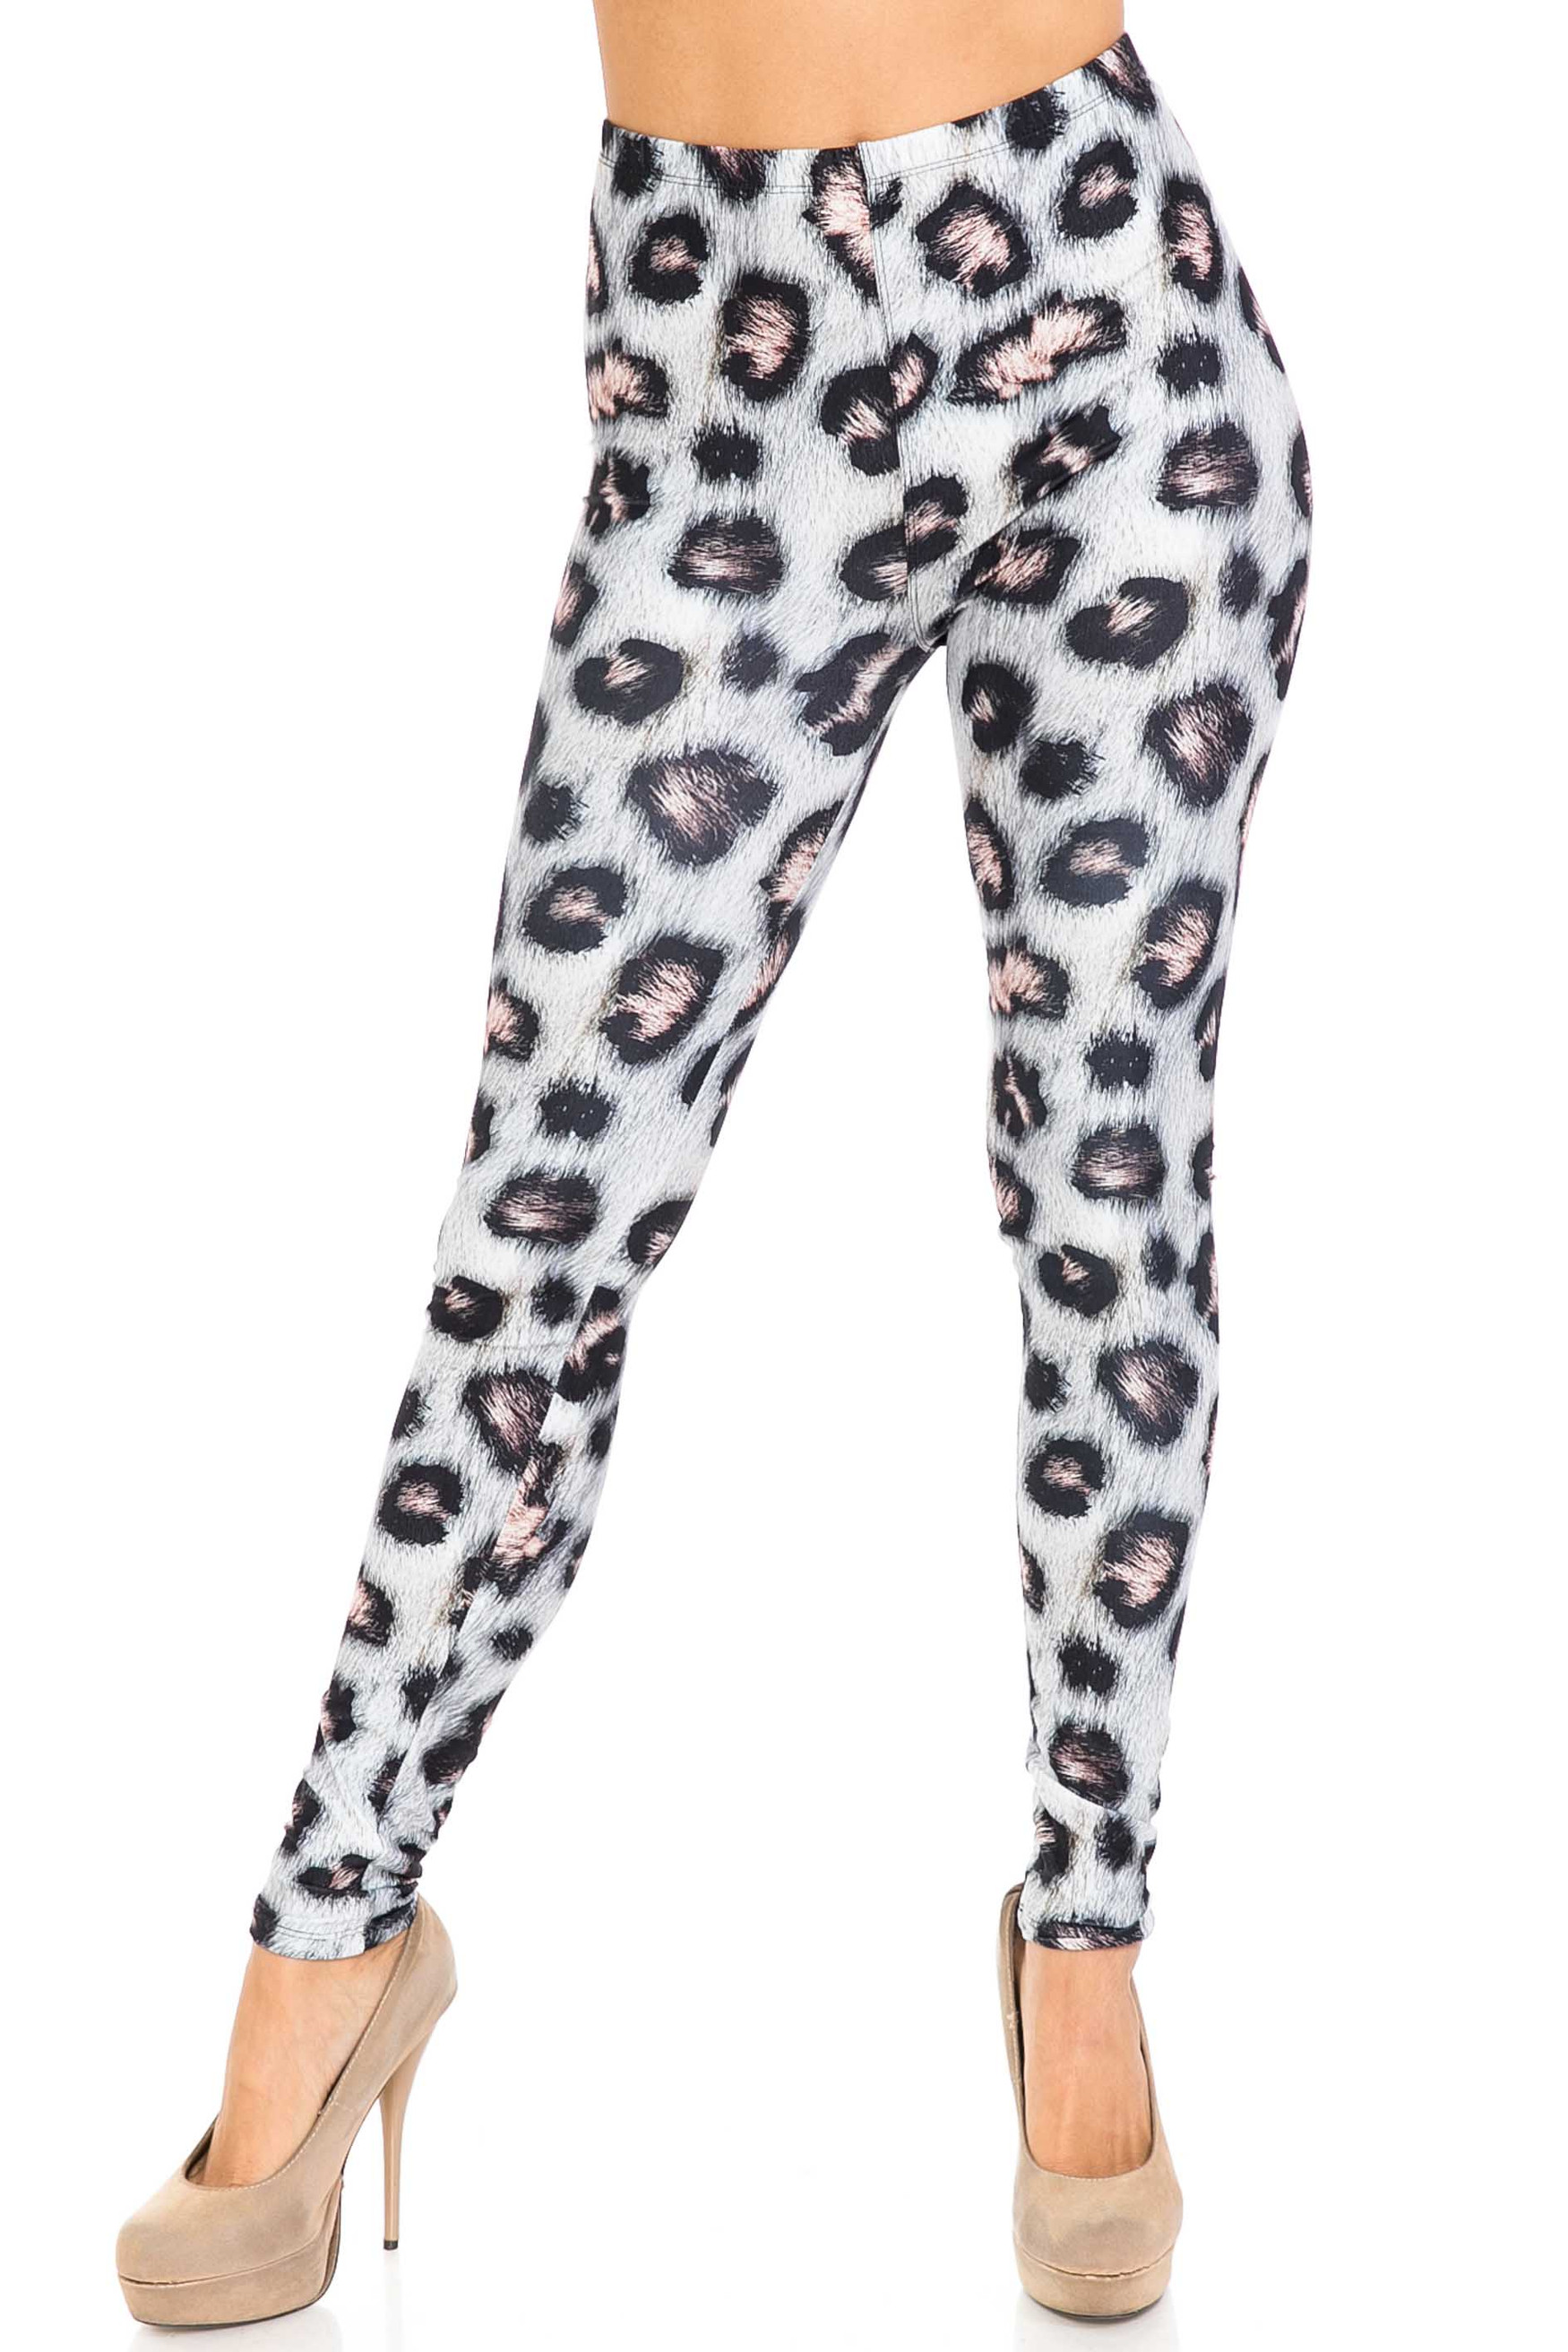 Creamy Soft Moda Leopard Leggings - USA Fashion™